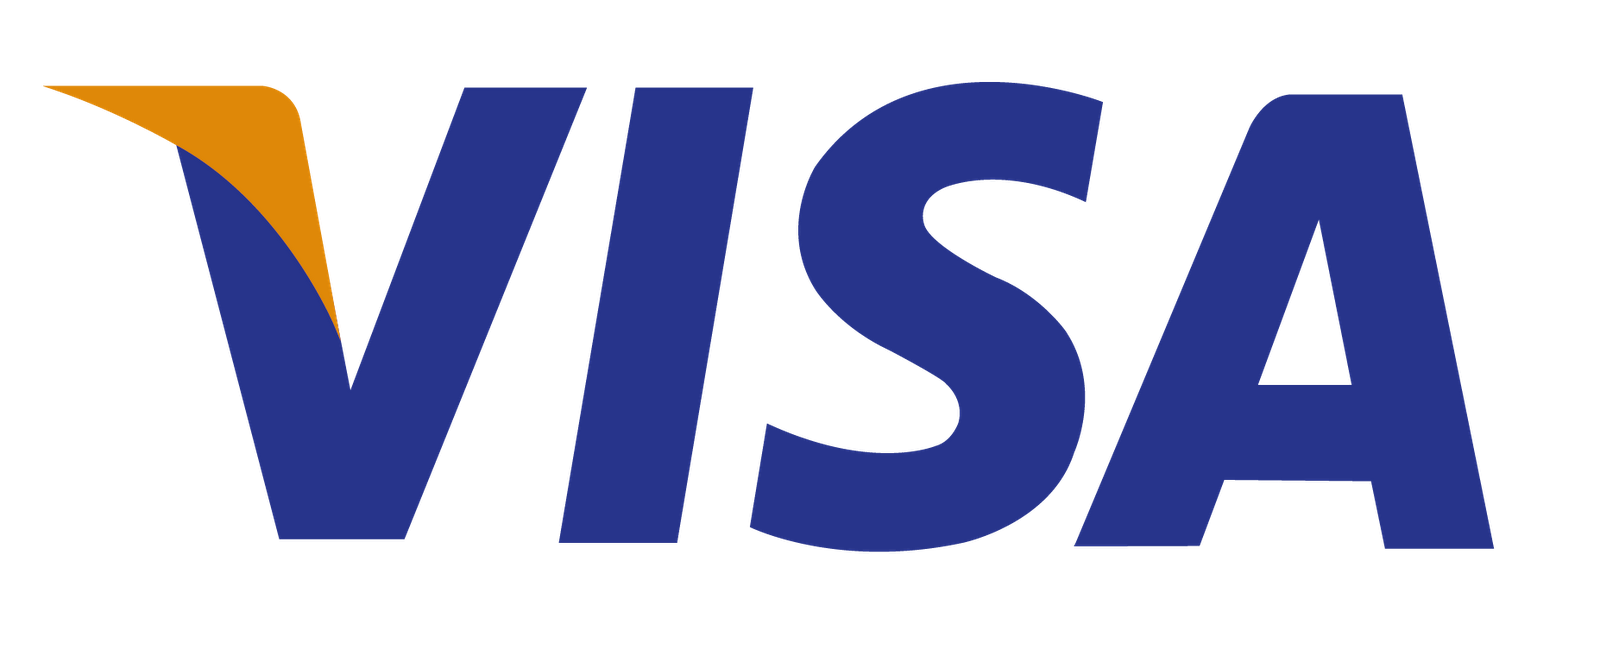 Visa Card Logo Png Images Free Download - Bank2home.com